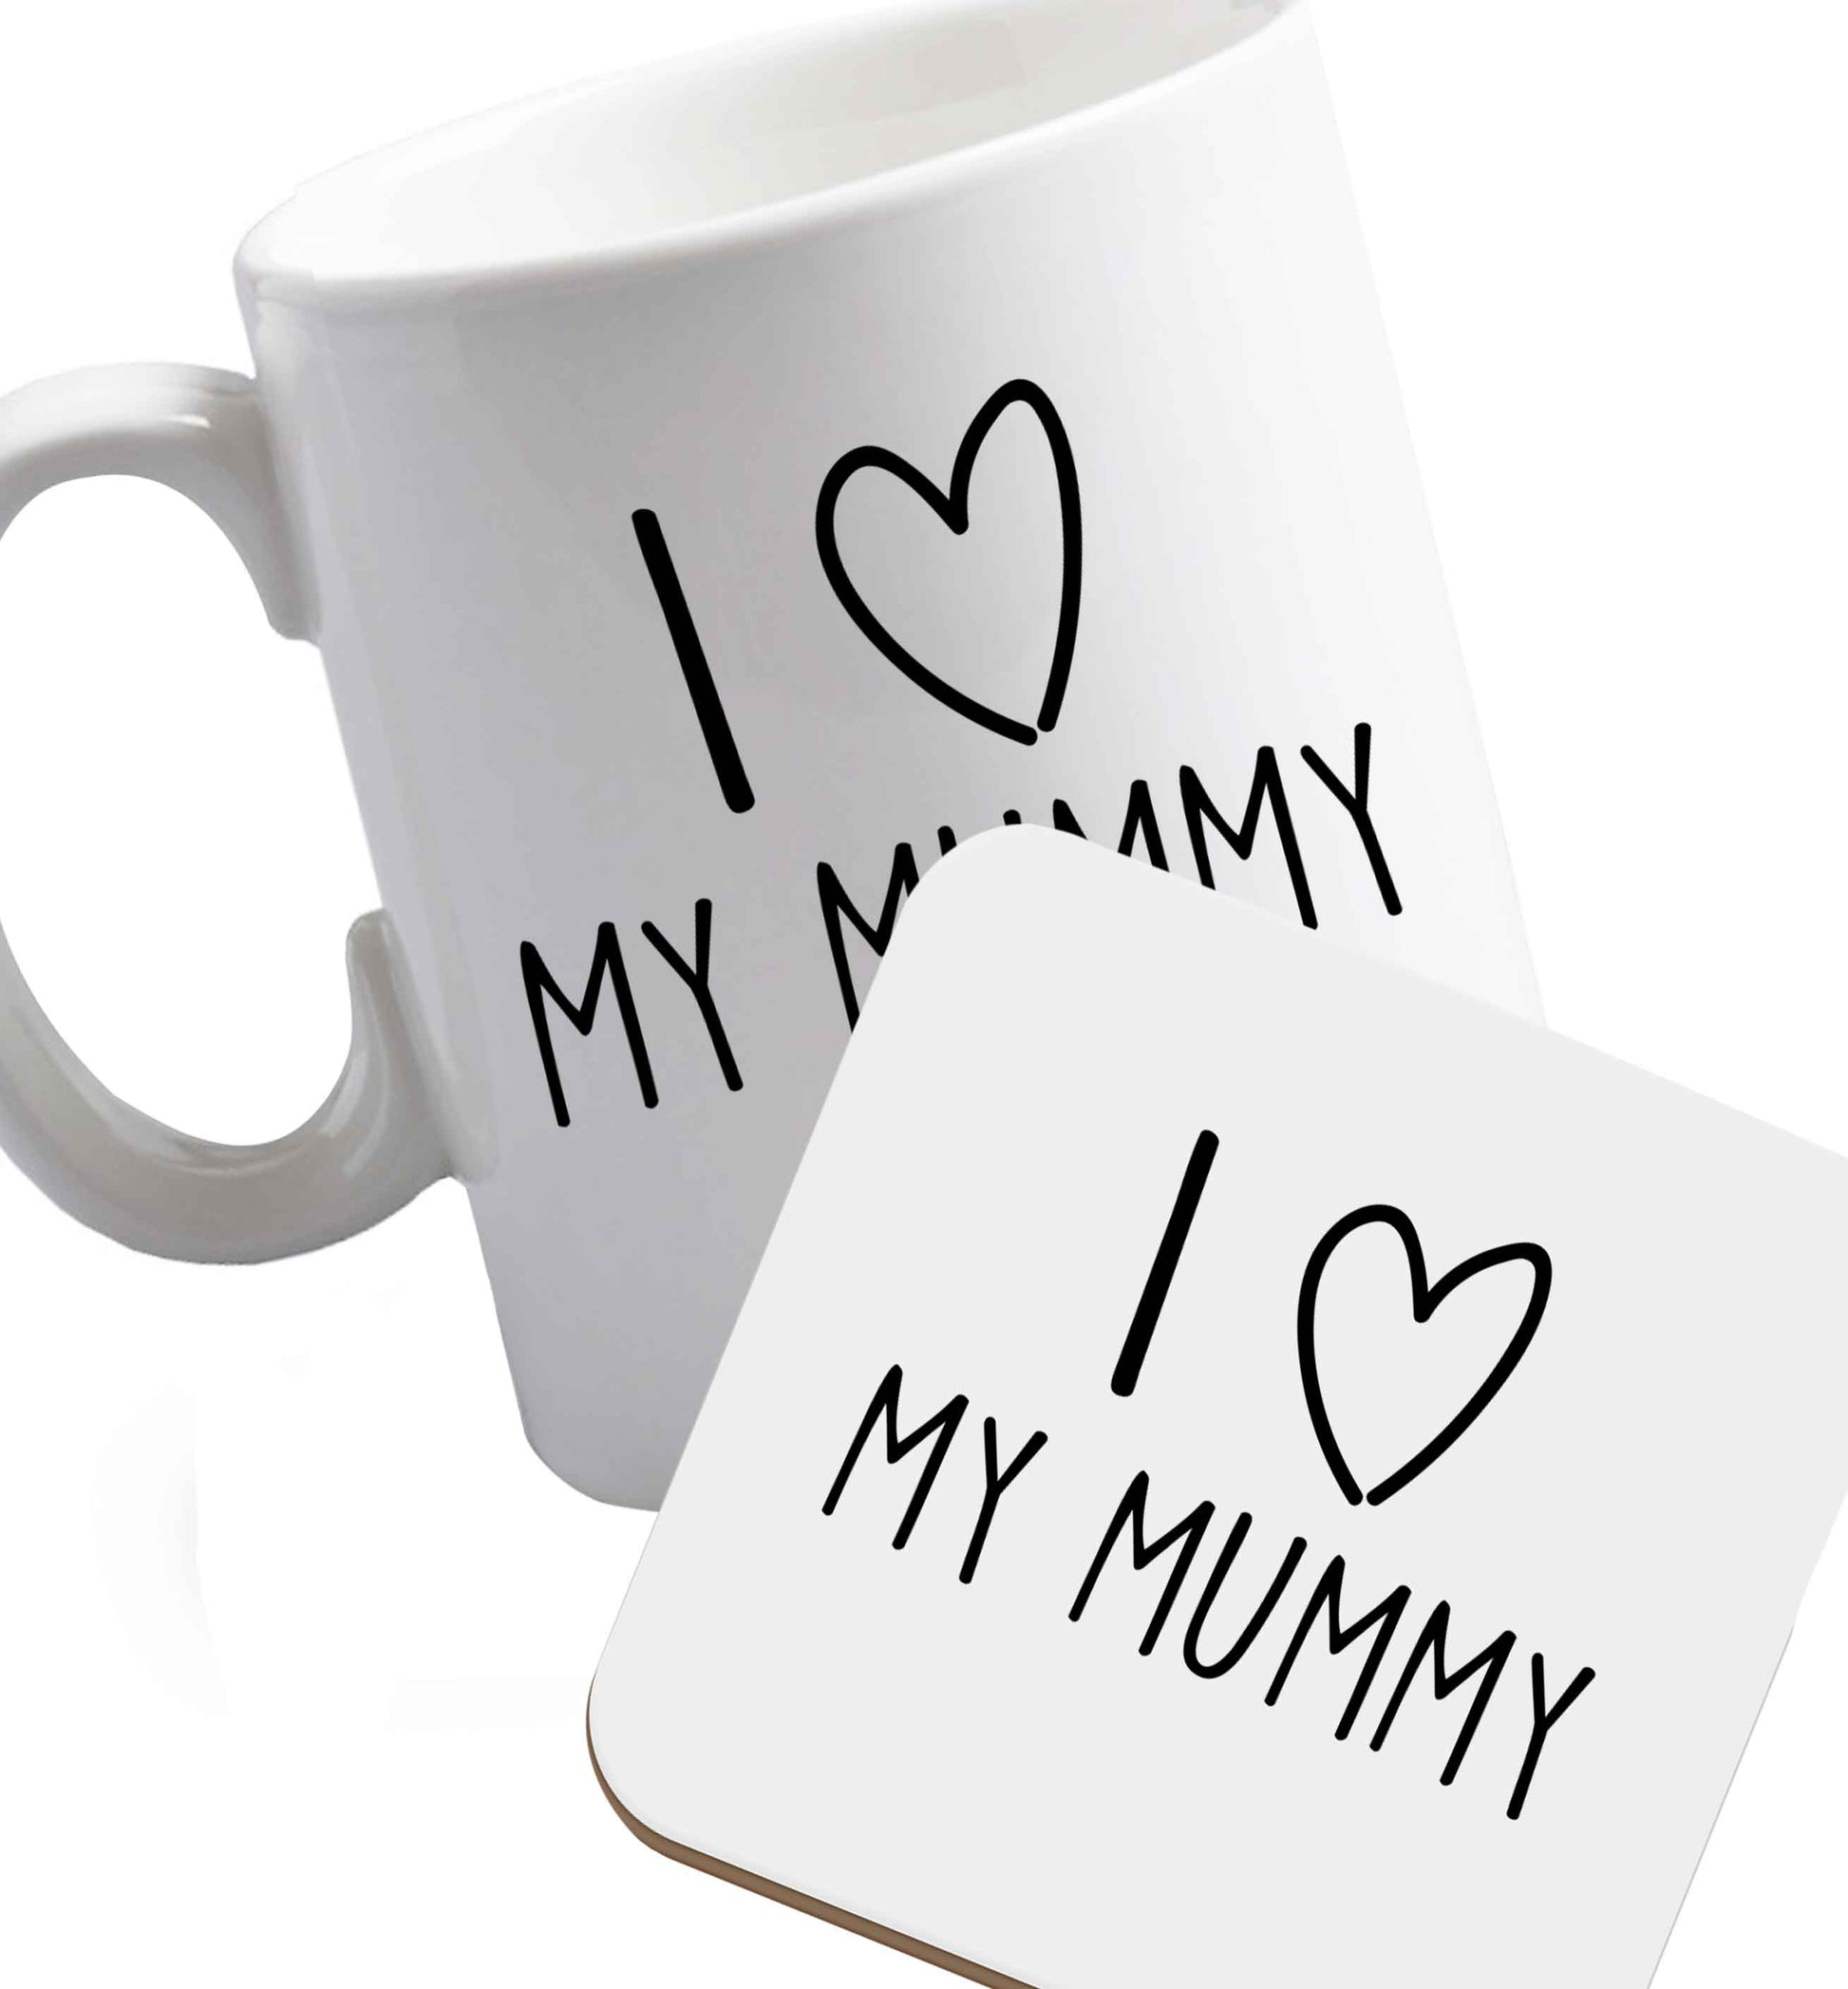 10 oz I love my mummy ceramic mug and coaster set right handed